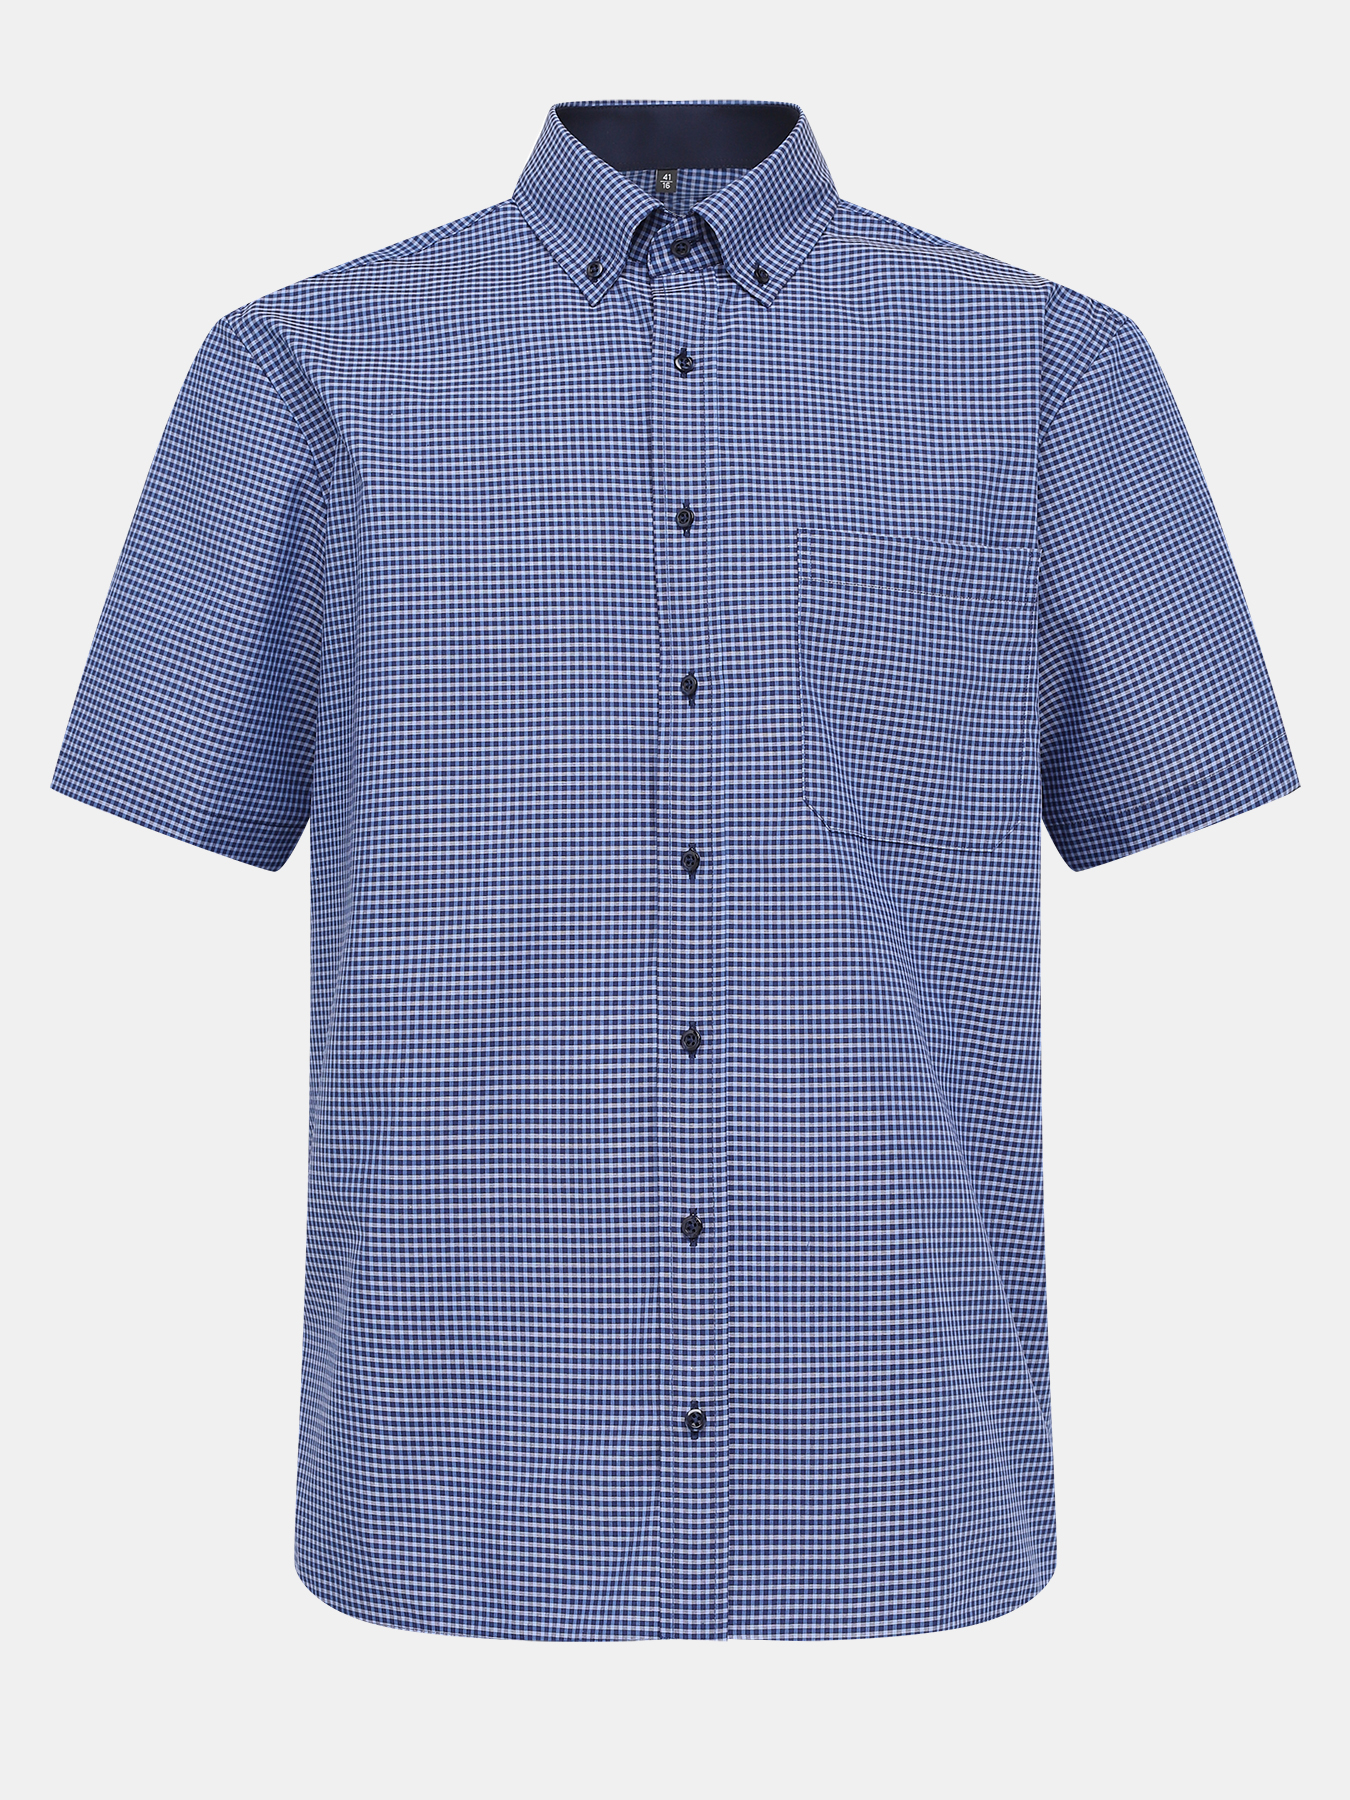 Рубашка Eterna 416186-023, цвет темно-синий, размер 58 - фото 1